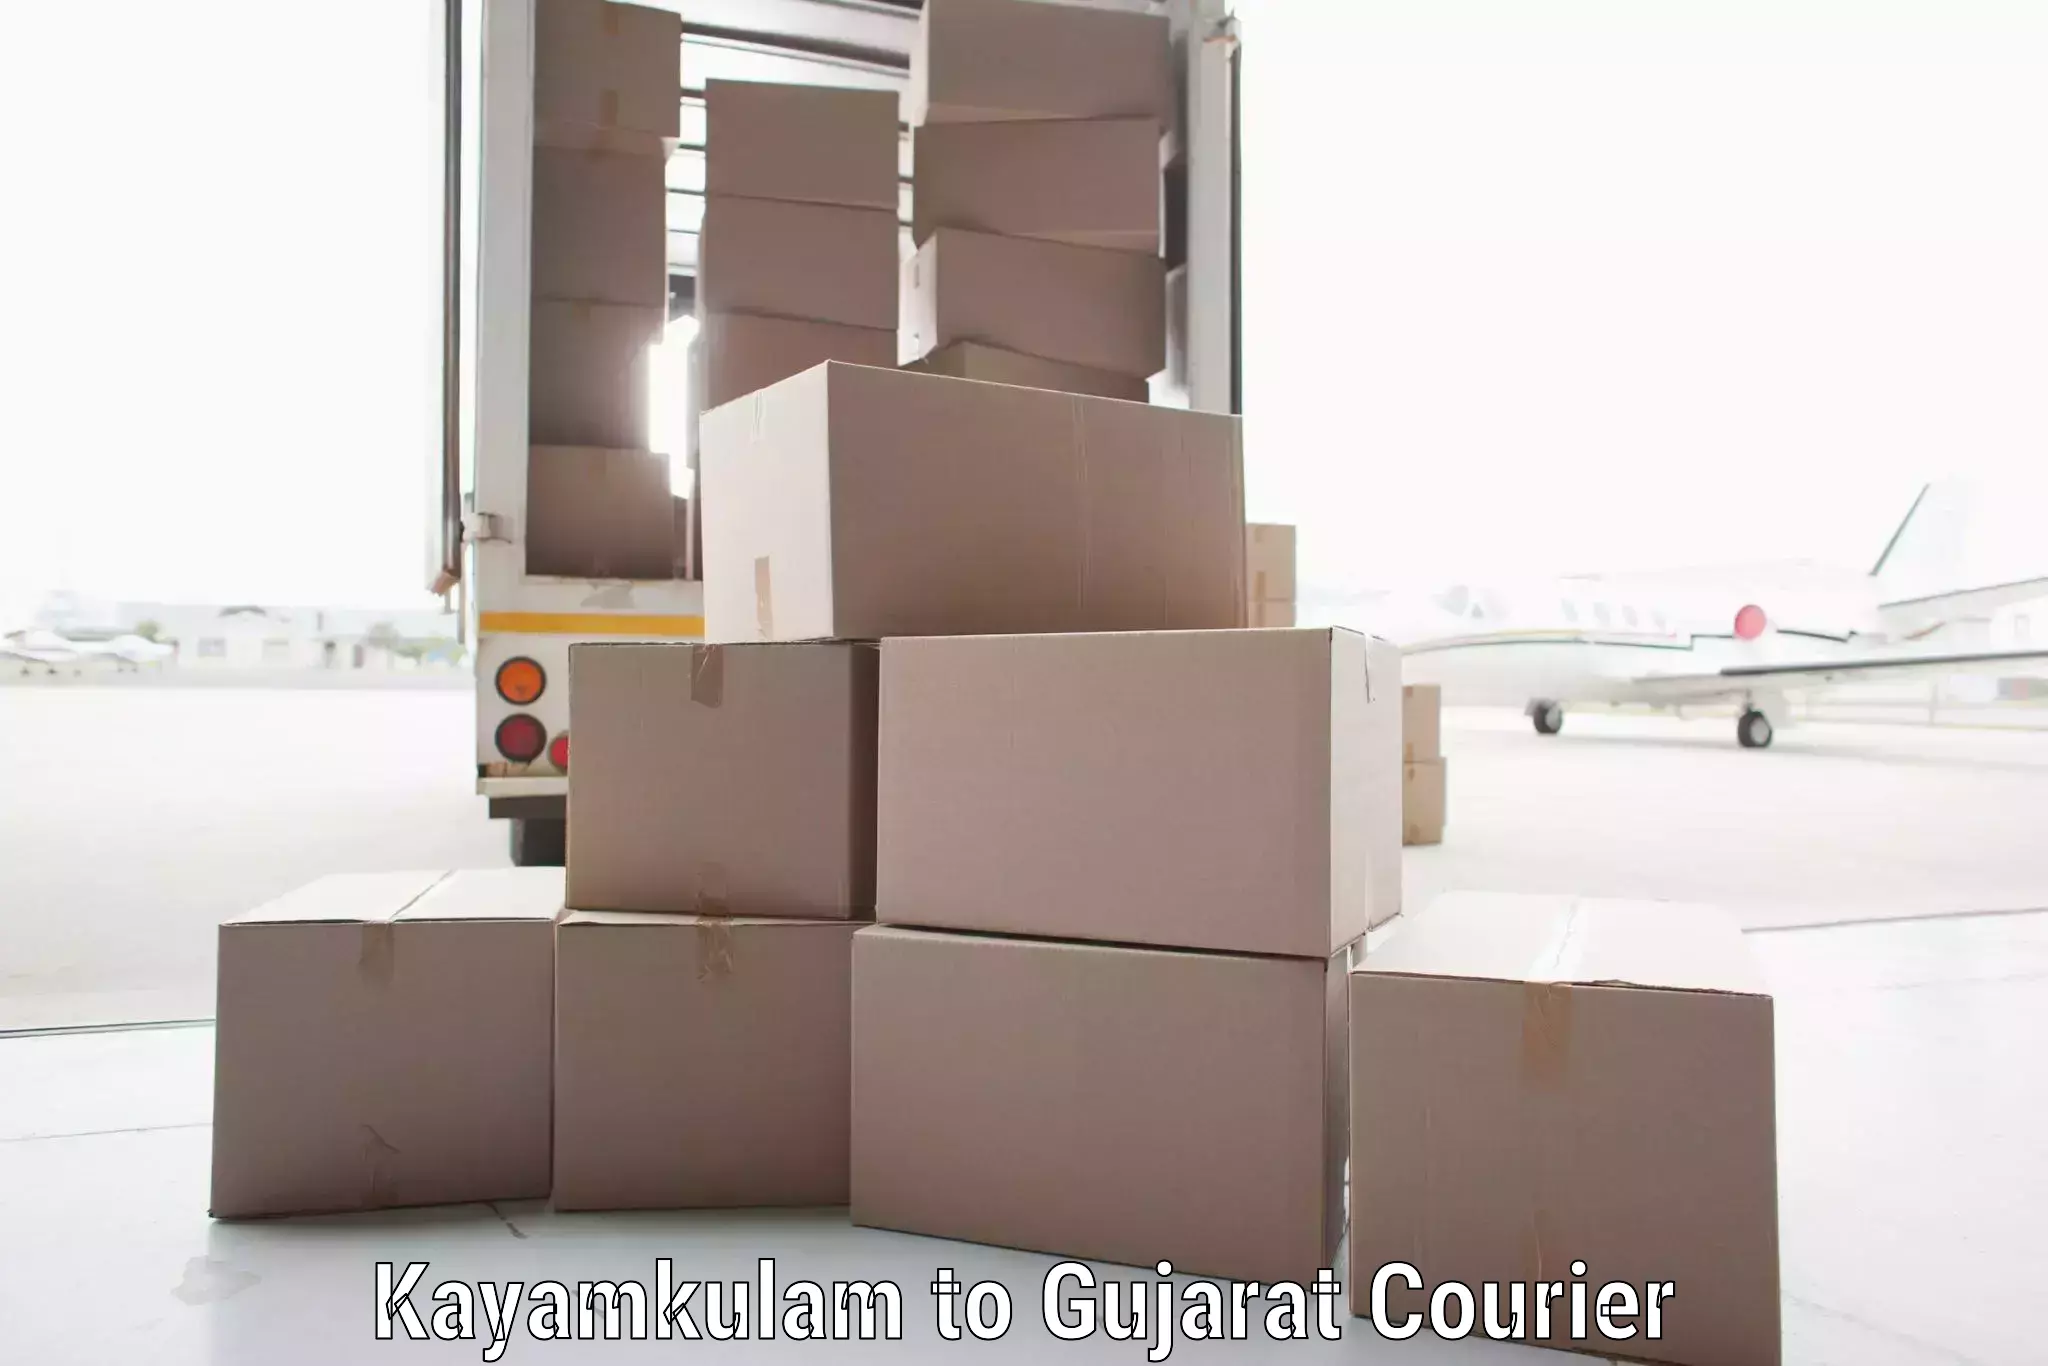 State-of-the-art courier technology Kayamkulam to Gandhinagar